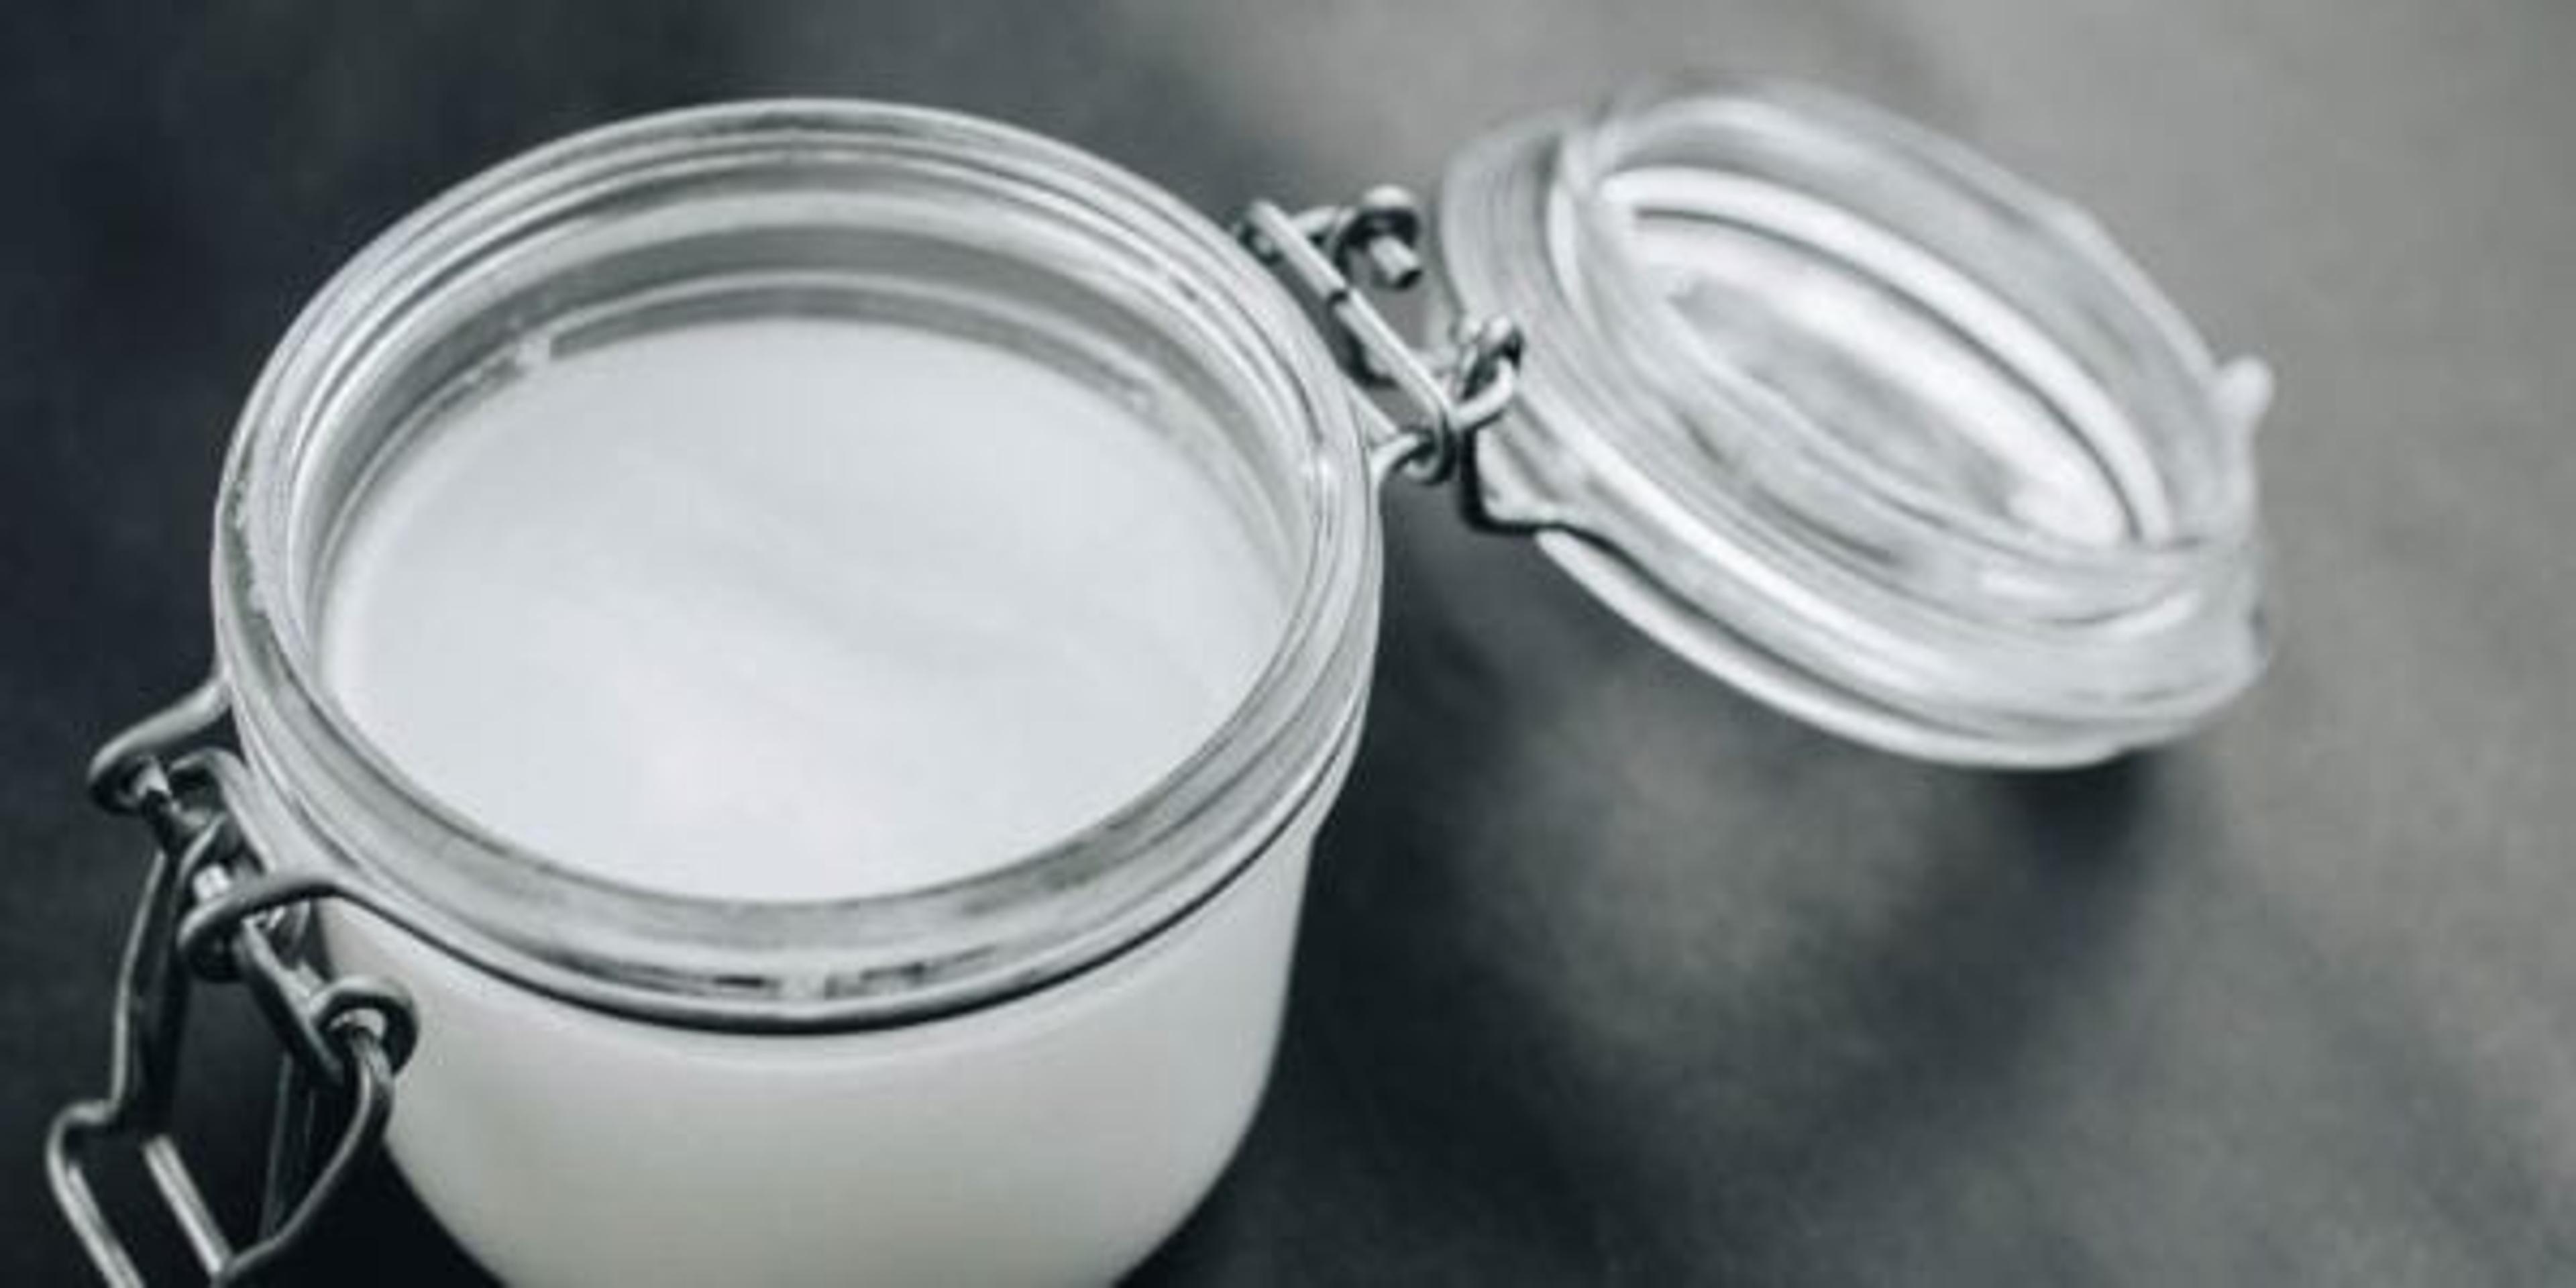 Coconut oil in a jar on dark background